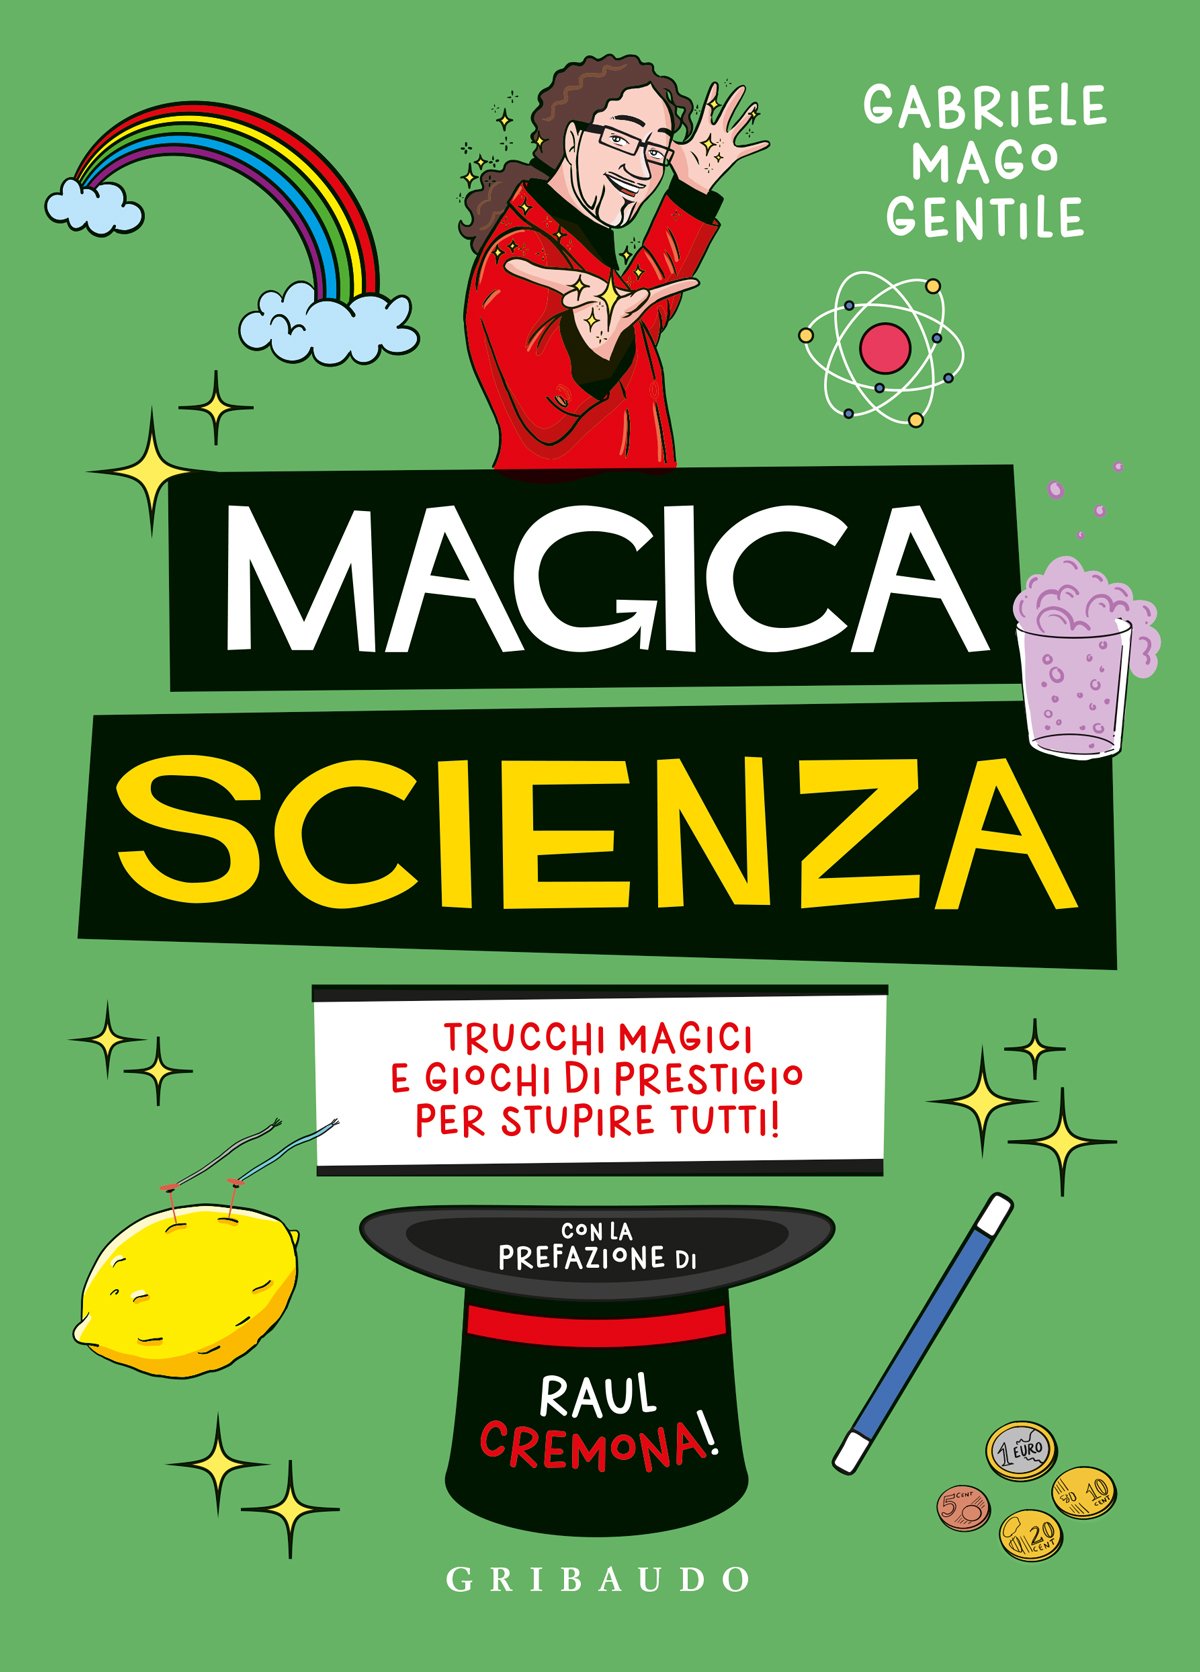 Magica scienza